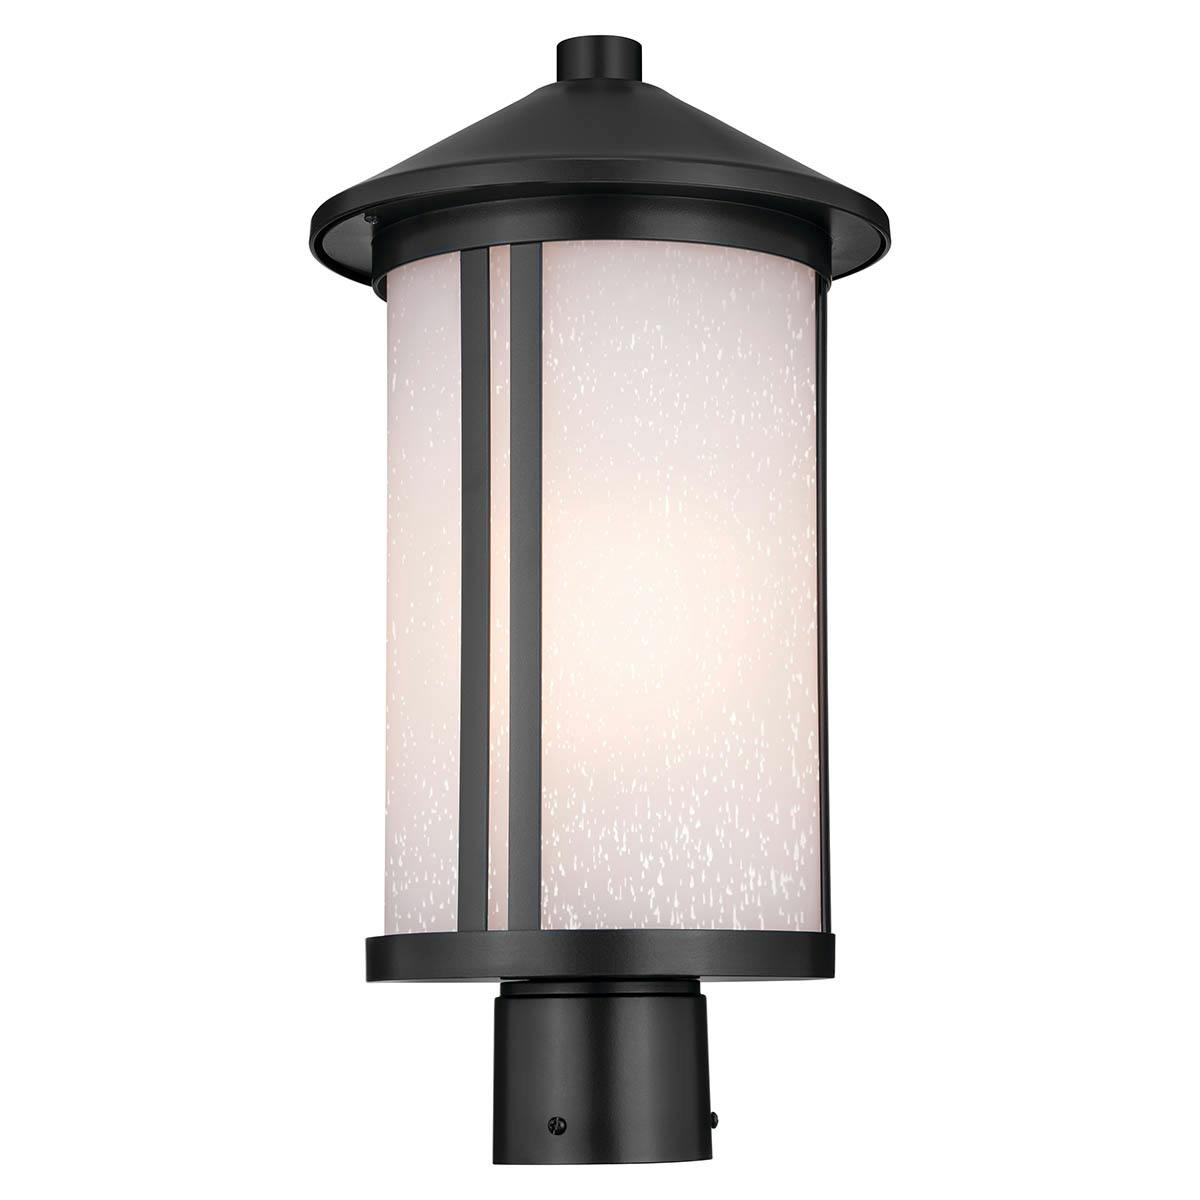 Lombard 17.25" 1 Light Post Lantern Black on a white background